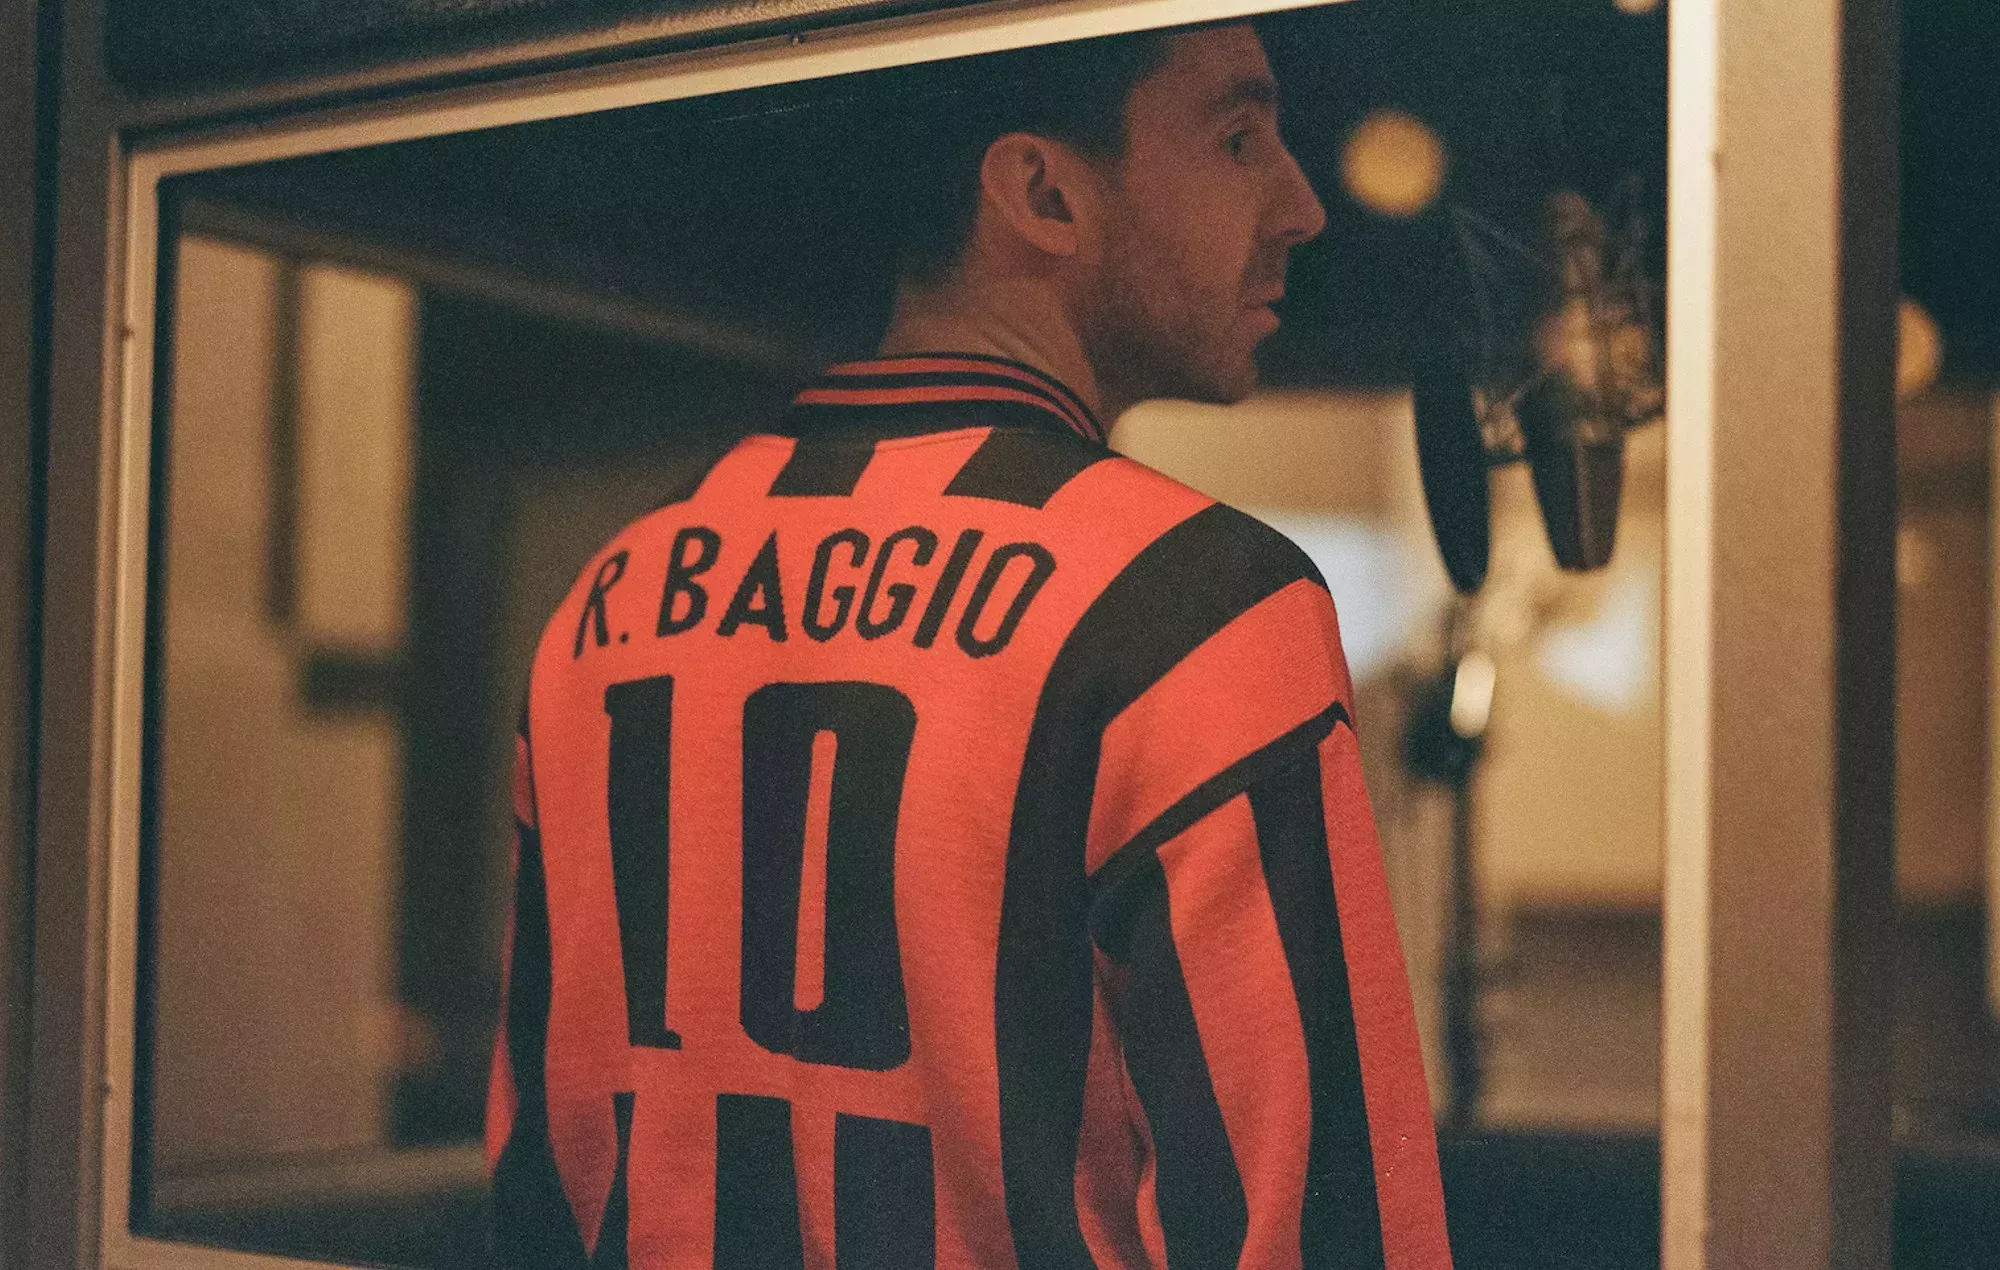 Miles Kane rinde homenaje al legendario futbolista italiano con su nuevo single 